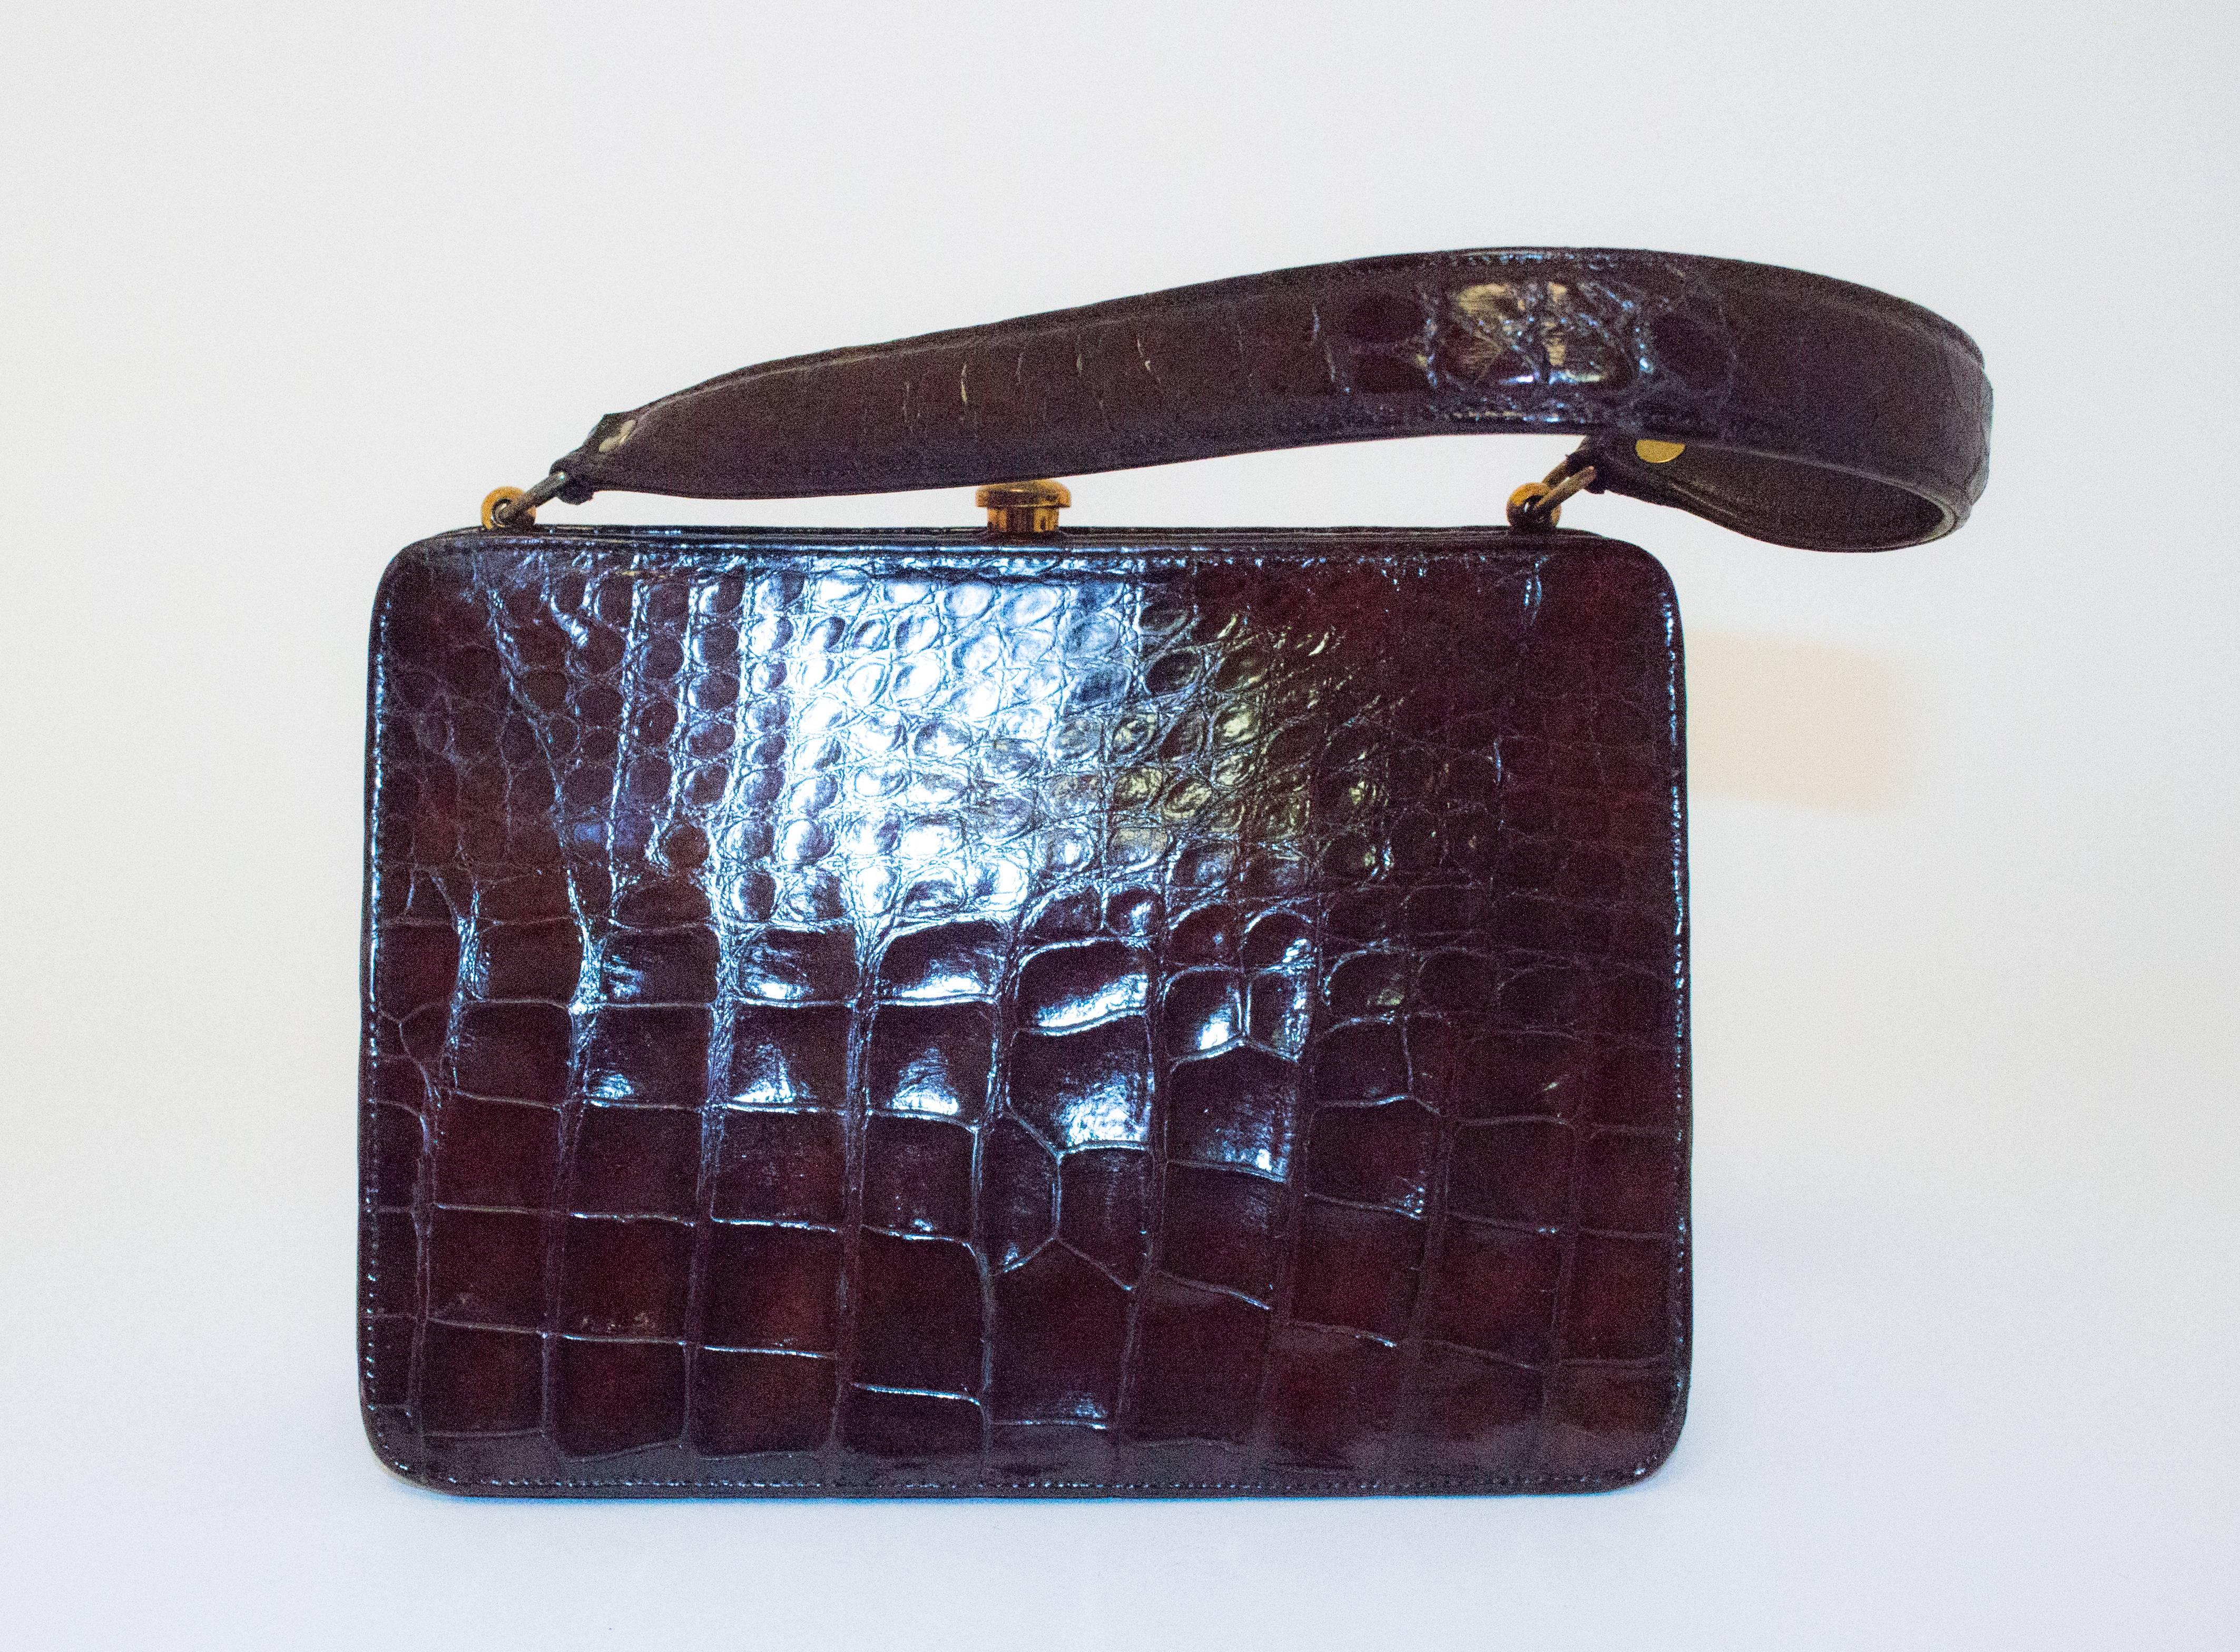 40s Brown Alligator Handbag. 

Demensions: 10" x 7"
Depth: 3 1/4" 
Strap: 16" 